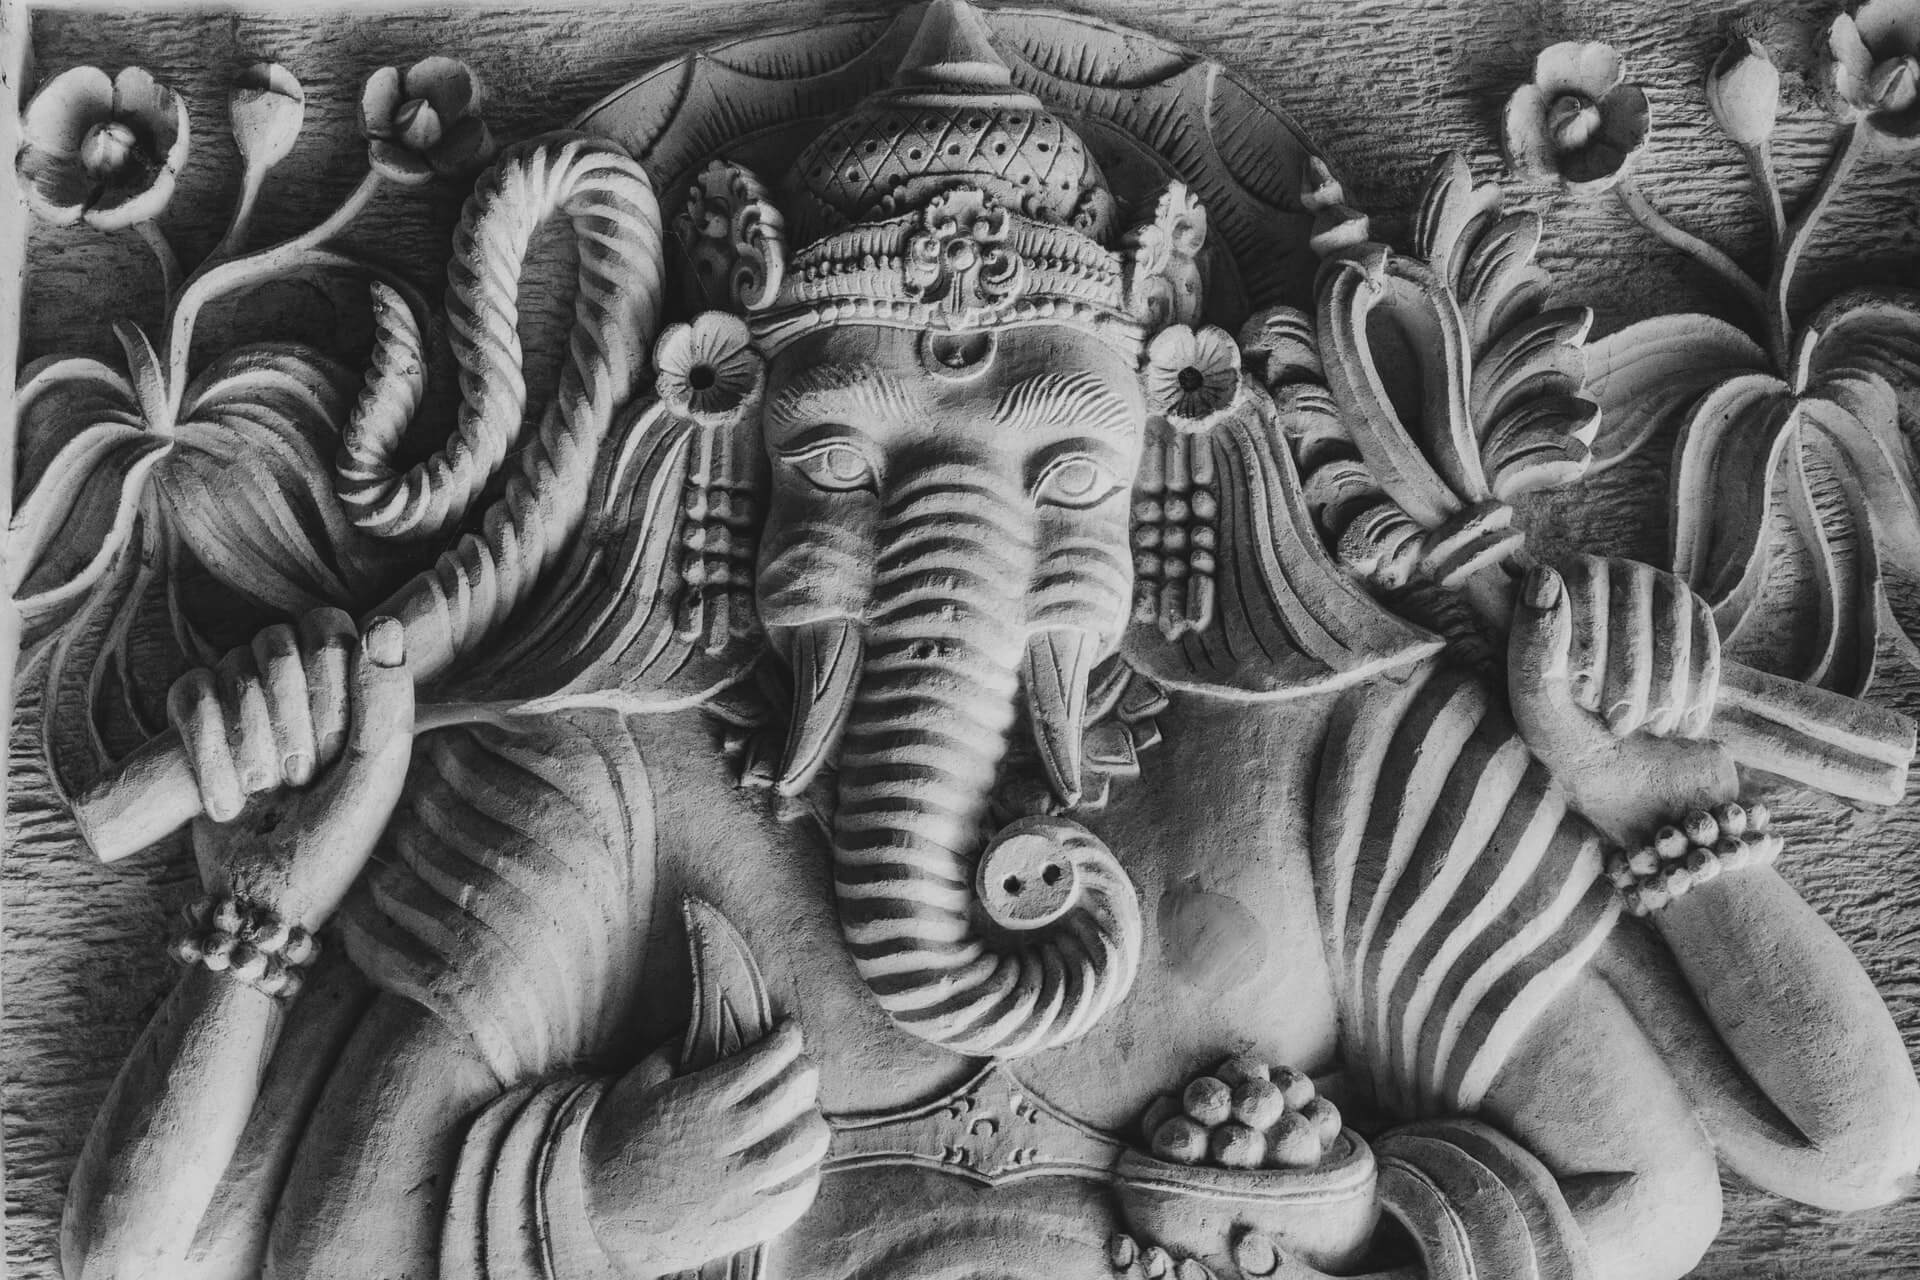 Ganesh Toran adorns